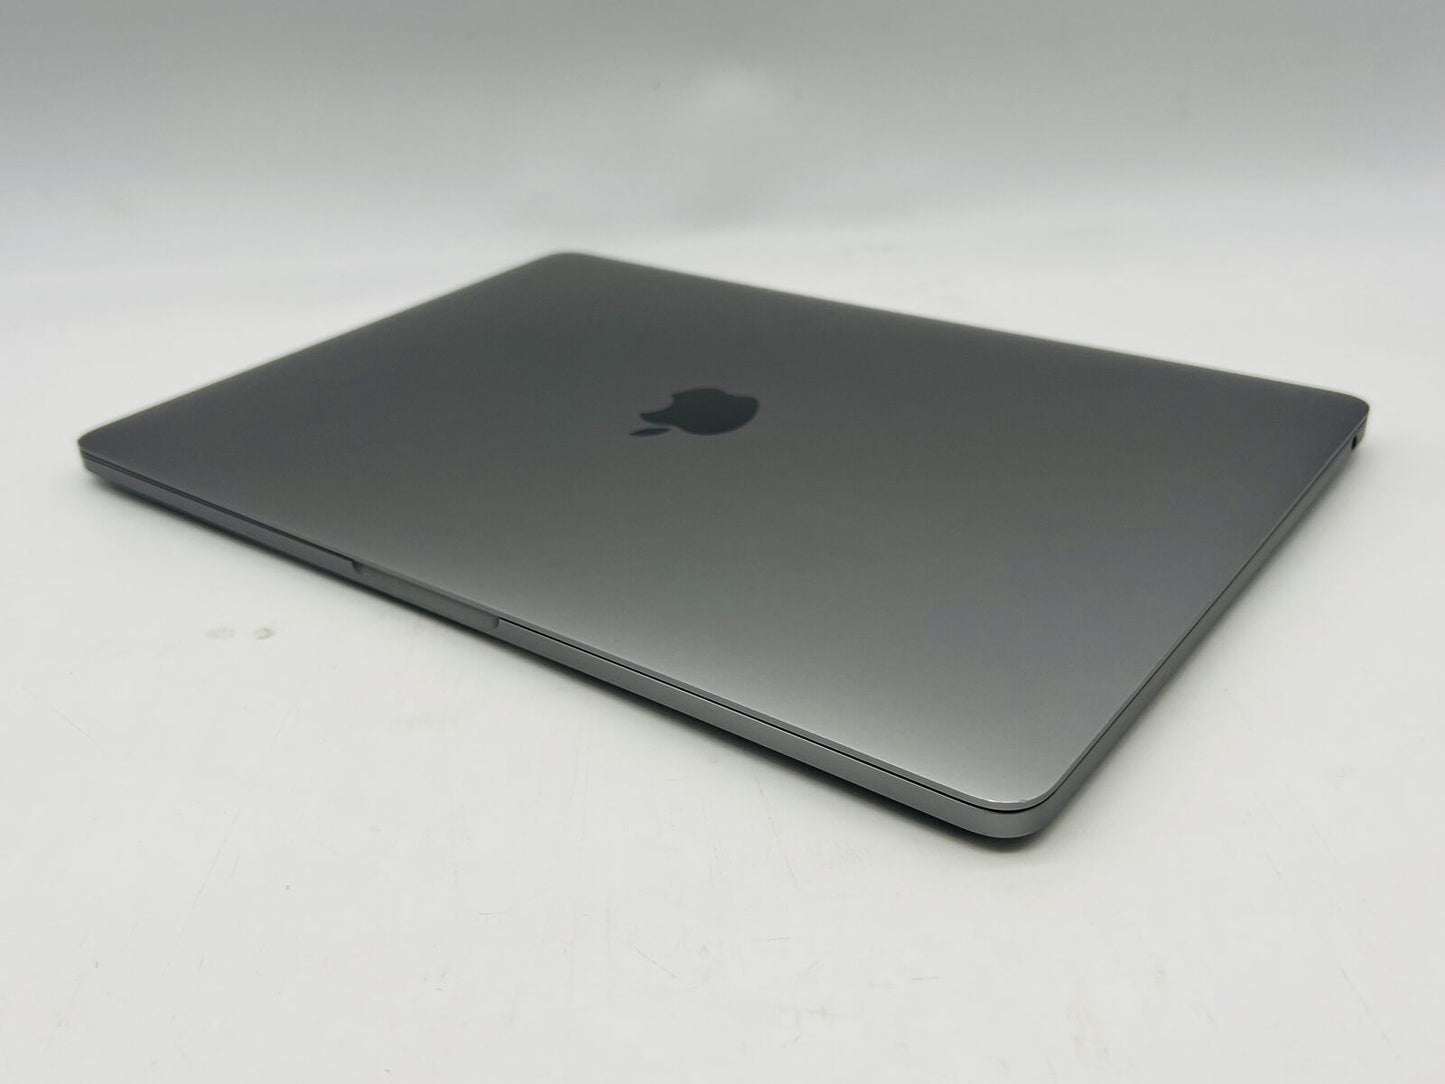 Apple 2020 MacBook Pro 13 in TB 1.4GHz i5 8GB RAM 256GB SSD IIPG645 - Very Good